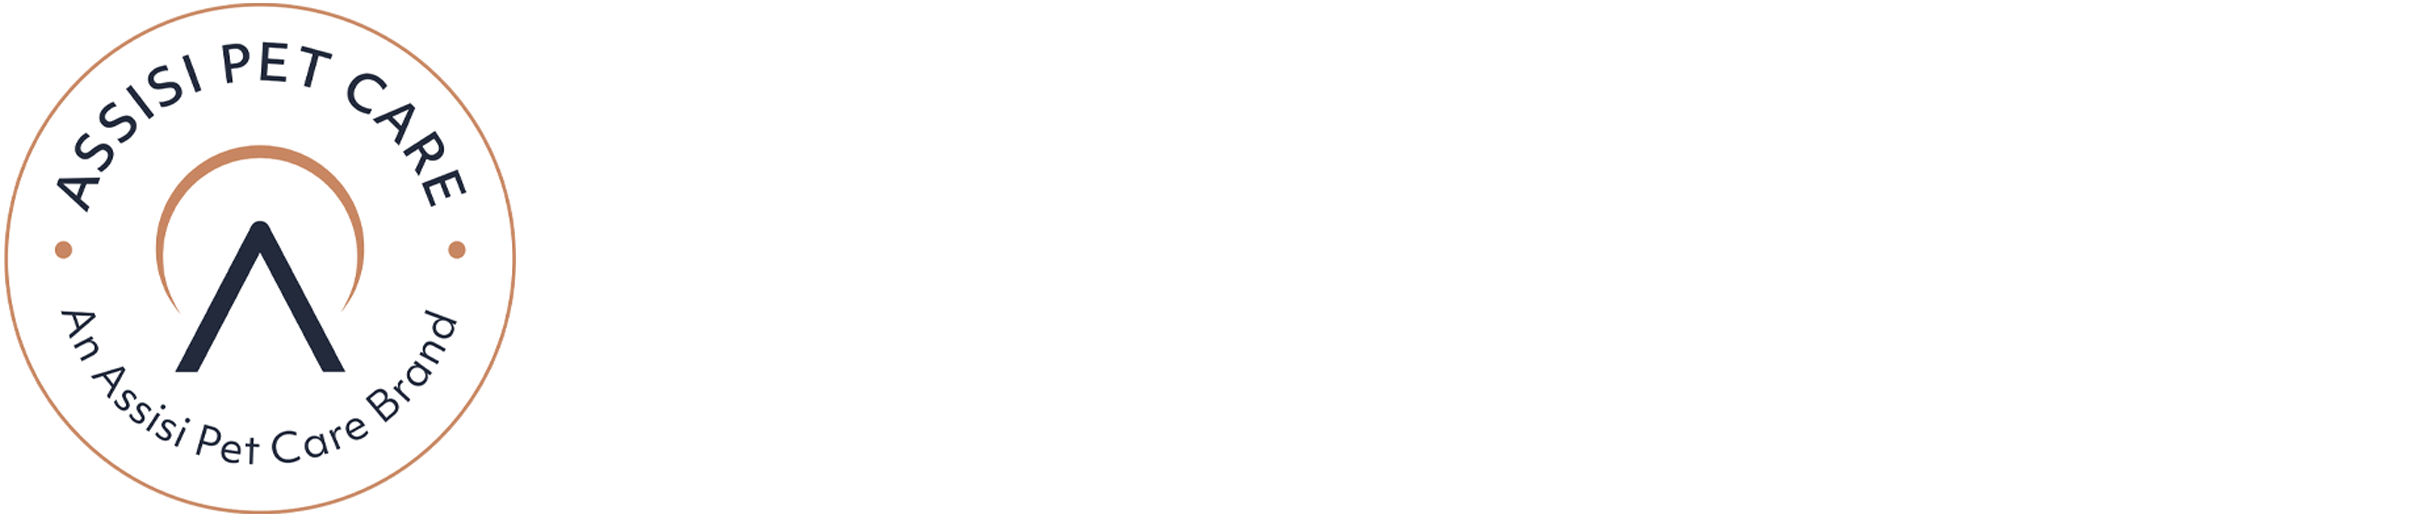 Pet Munchies Beef Liver Crunch Dog Treats 90g